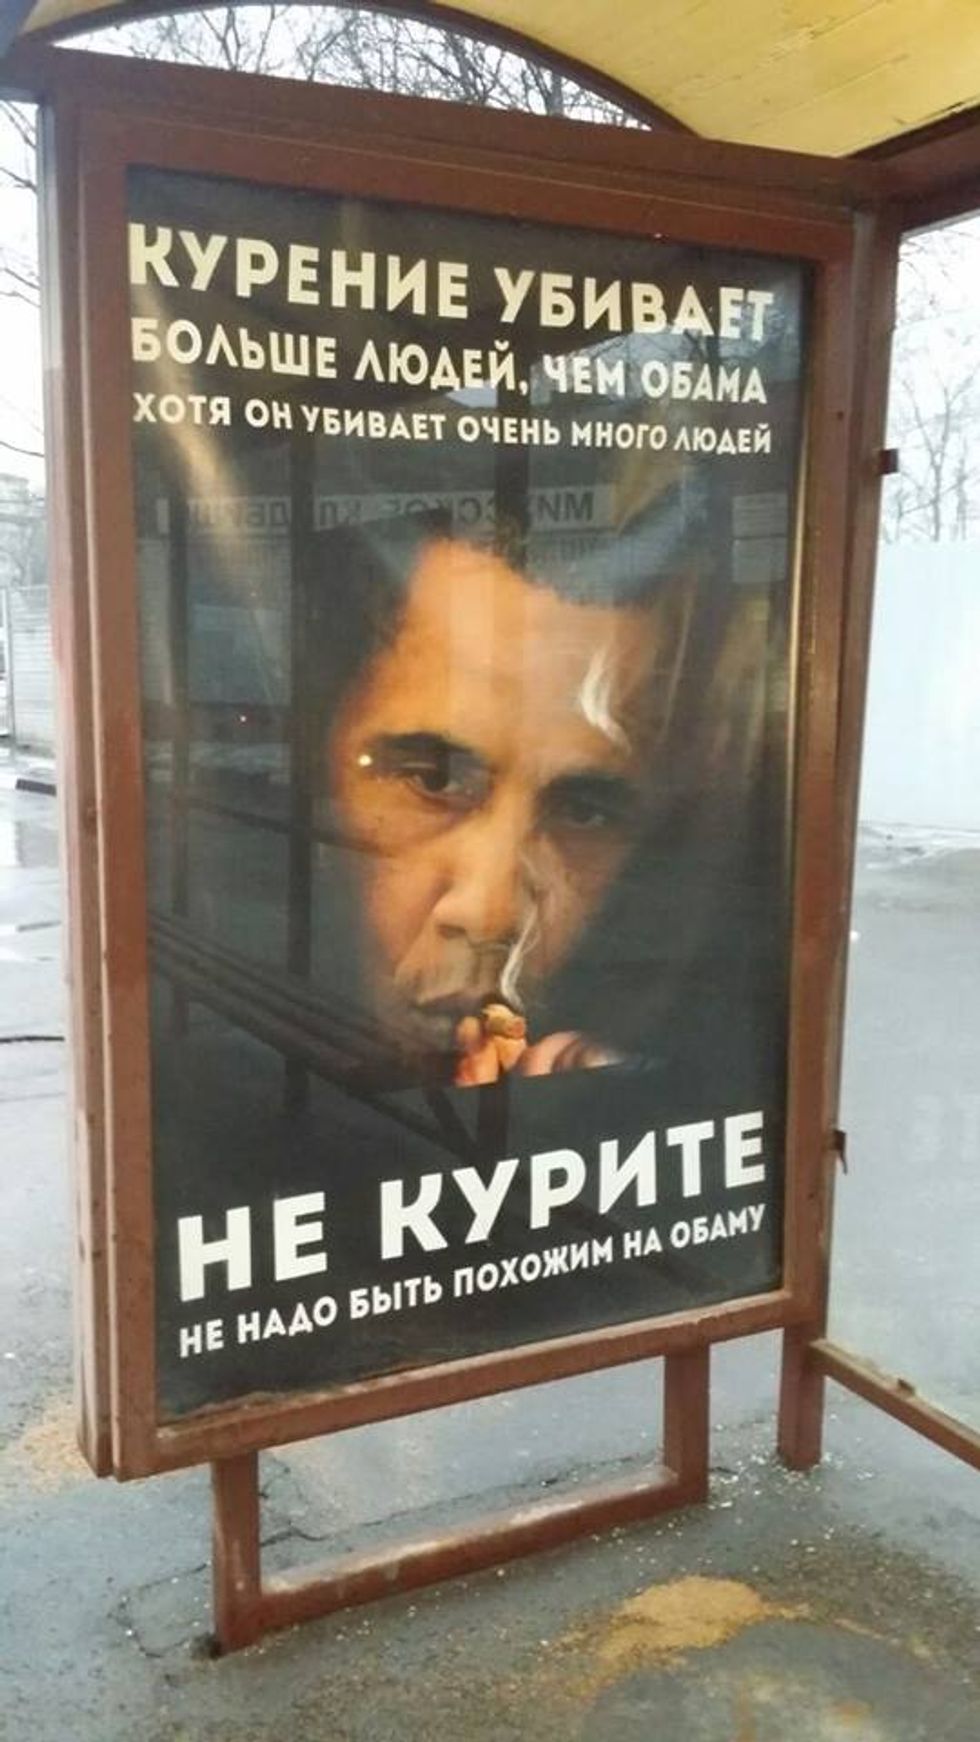 'Don’t Smoke, Don’t Be Like Obama' — Russian Anti-Smoking Ad Likens President to Mass Killer